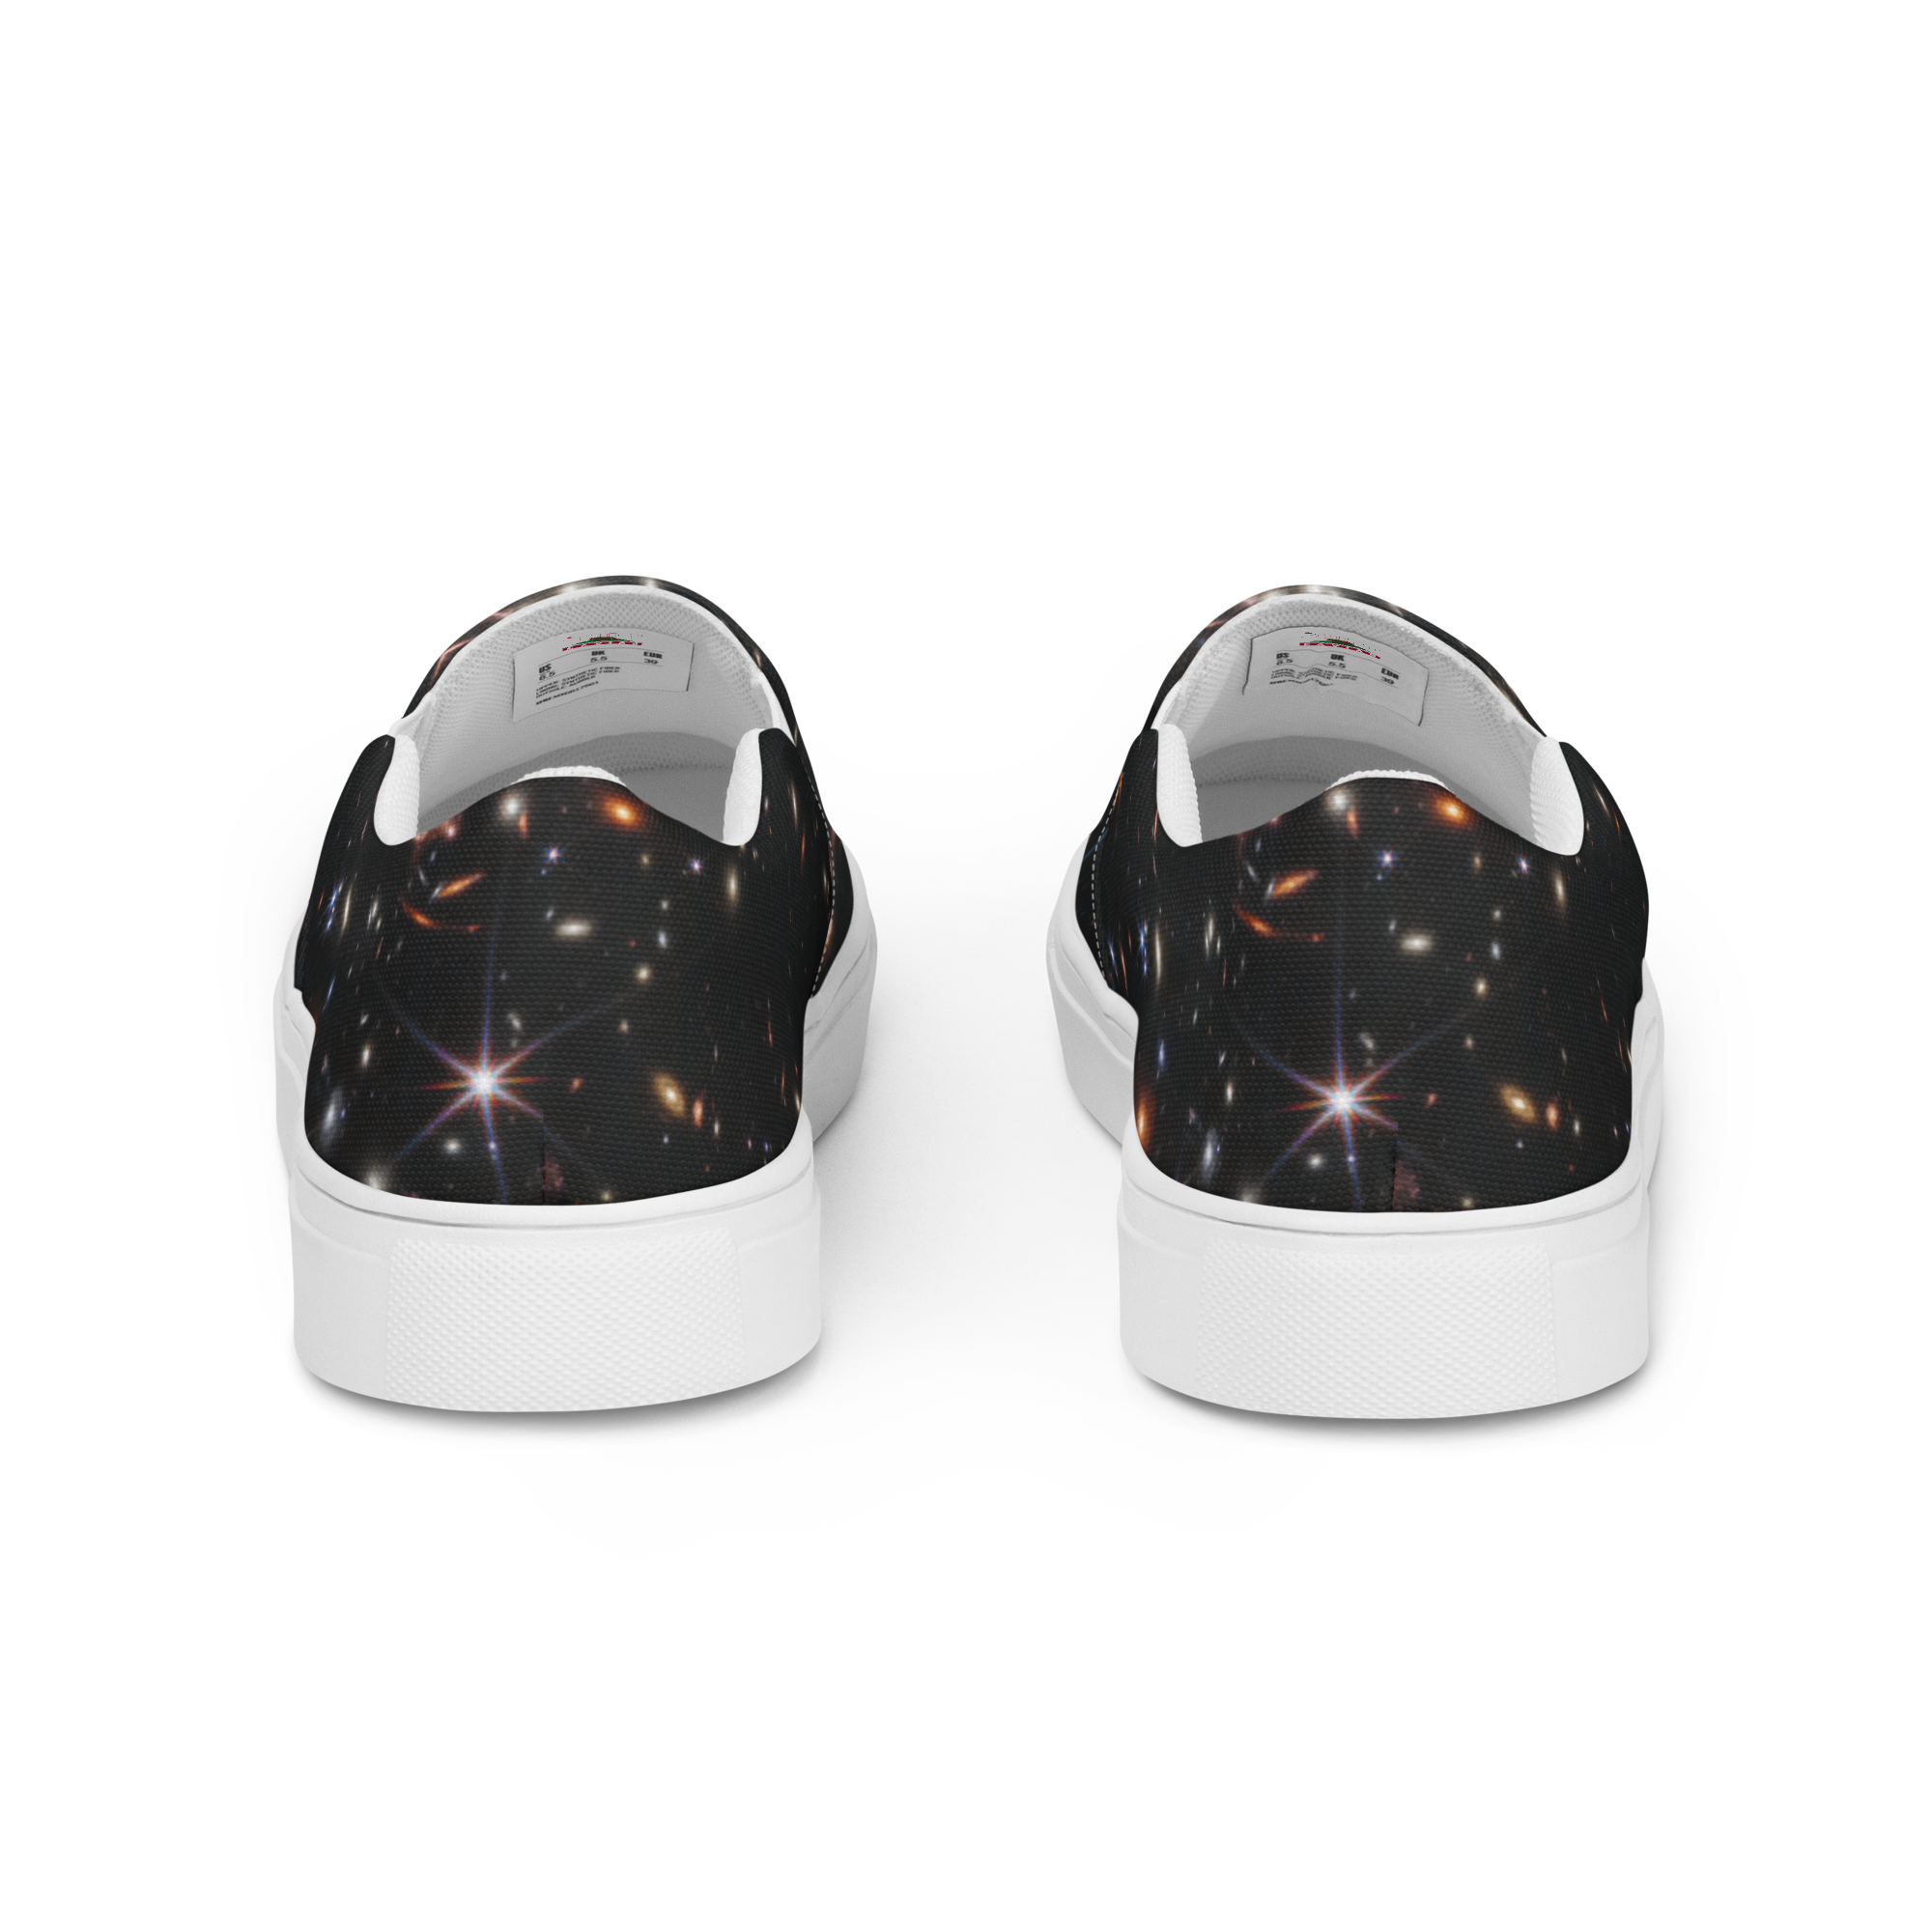 Interstellar Caviar Men’s slip-on canvas shoes